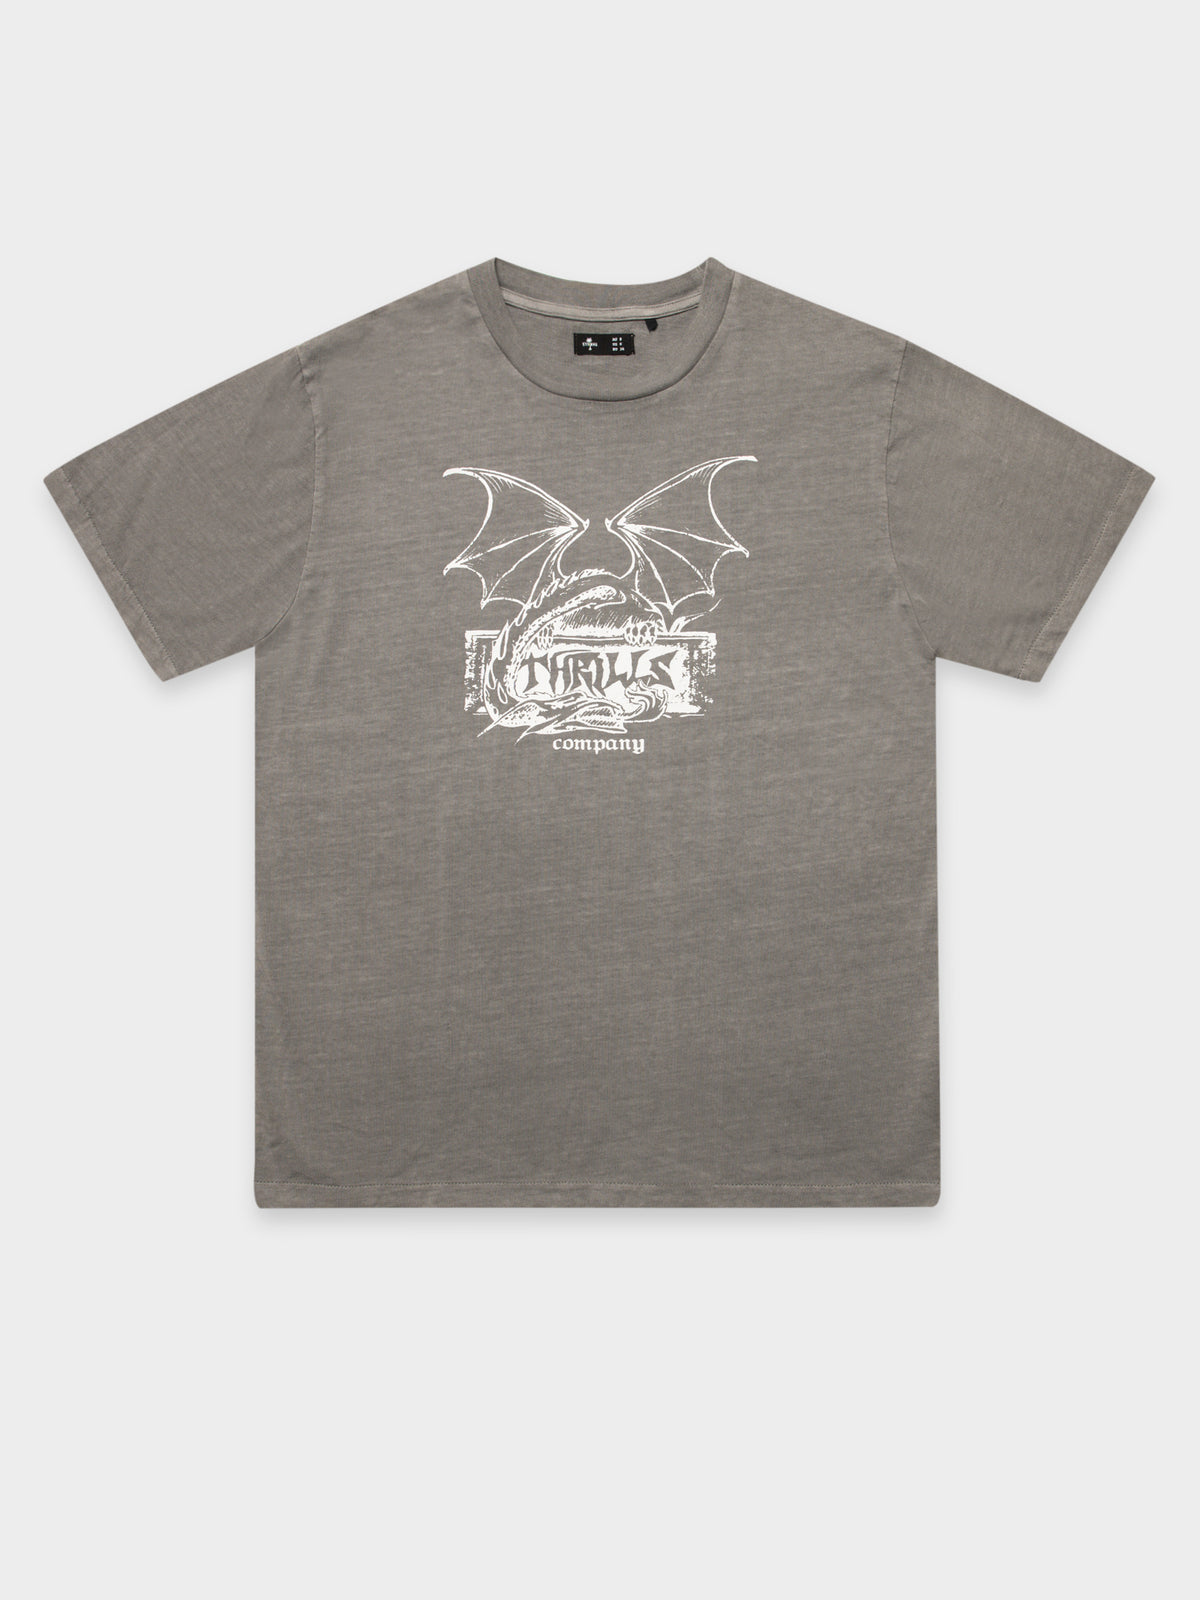 Gatekeeper Merch Fit T-Shirt in Washed Grey